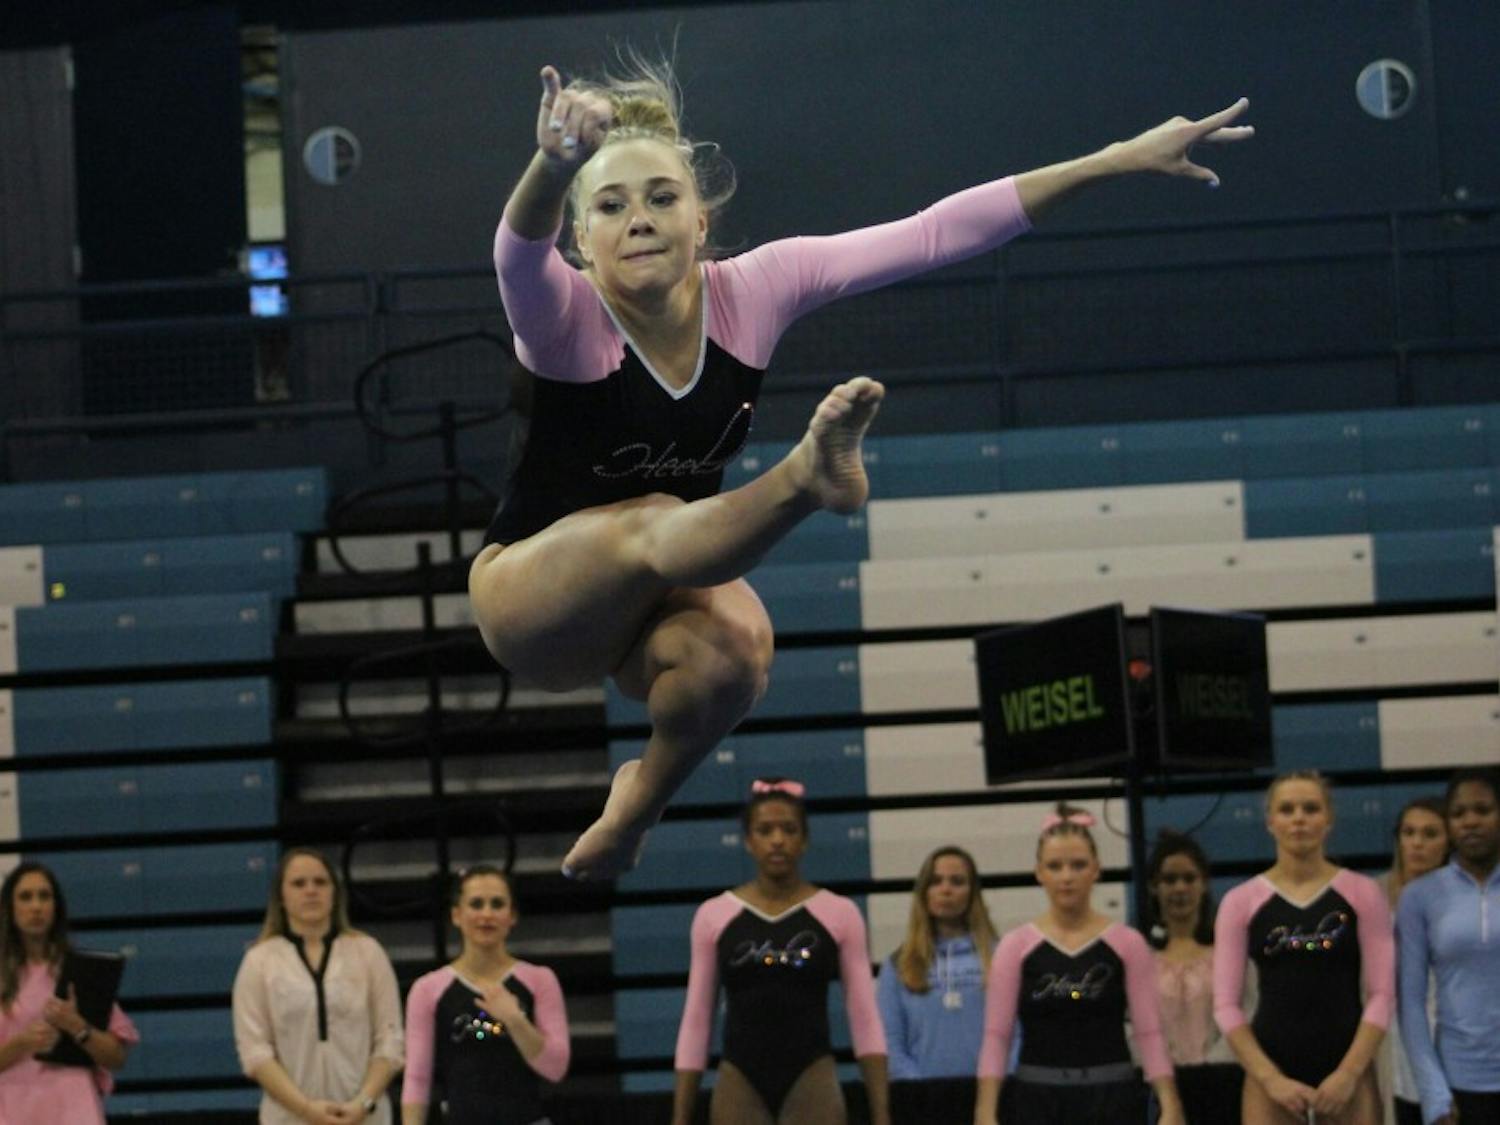 Senior Lauren Weisel competes against Brown in the North Carolina gymnastics team's meet on Feb. 19 on Carmichael Arena.